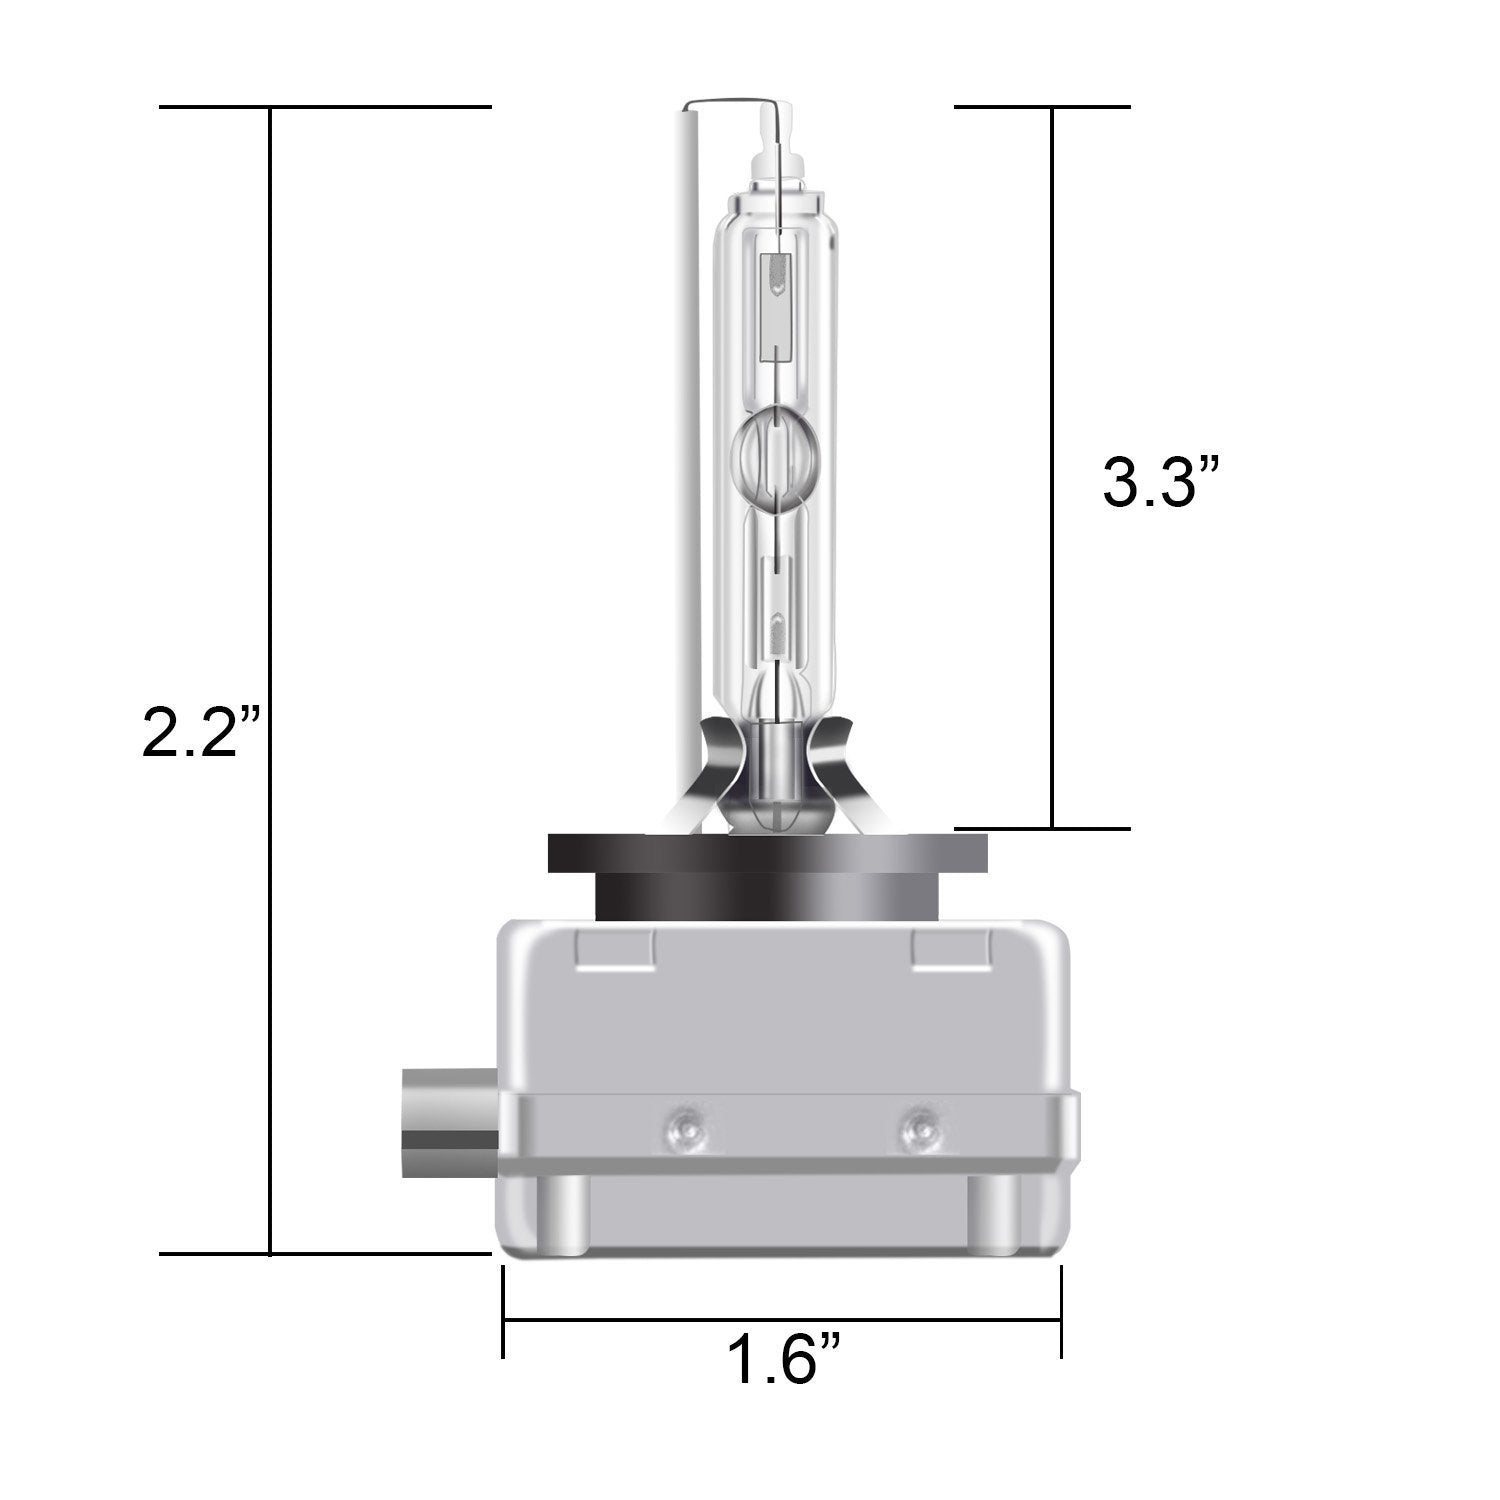 D1S D1R OEM HID Xenon Headlight Factory Replacement Light Bulbs